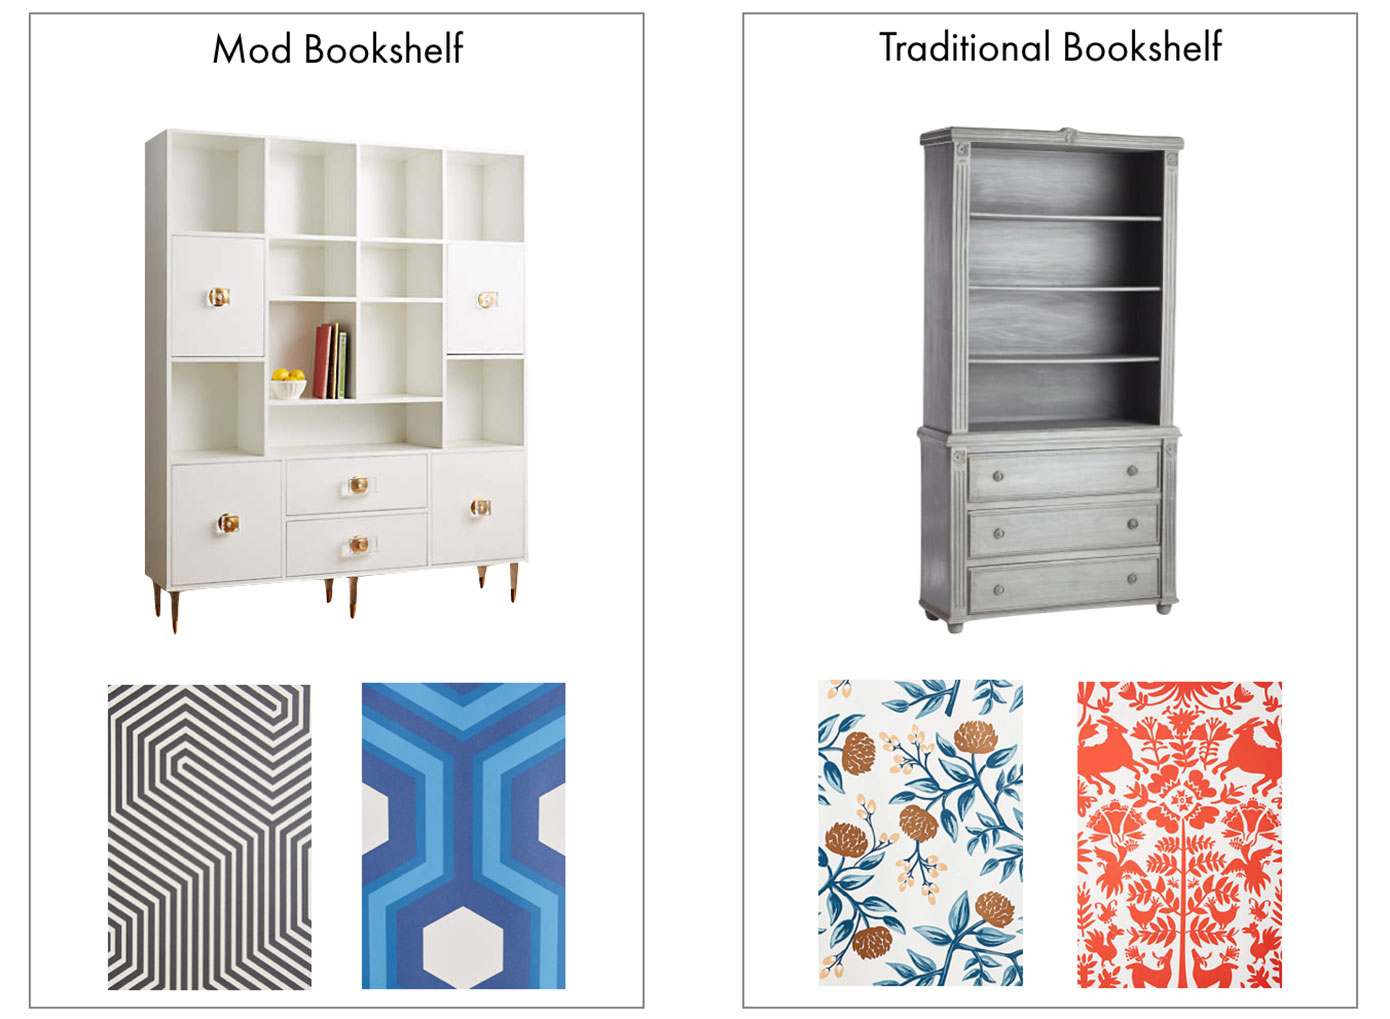 diy, bookshelf, bookcase, wallpaper, traditional, mod, transformation